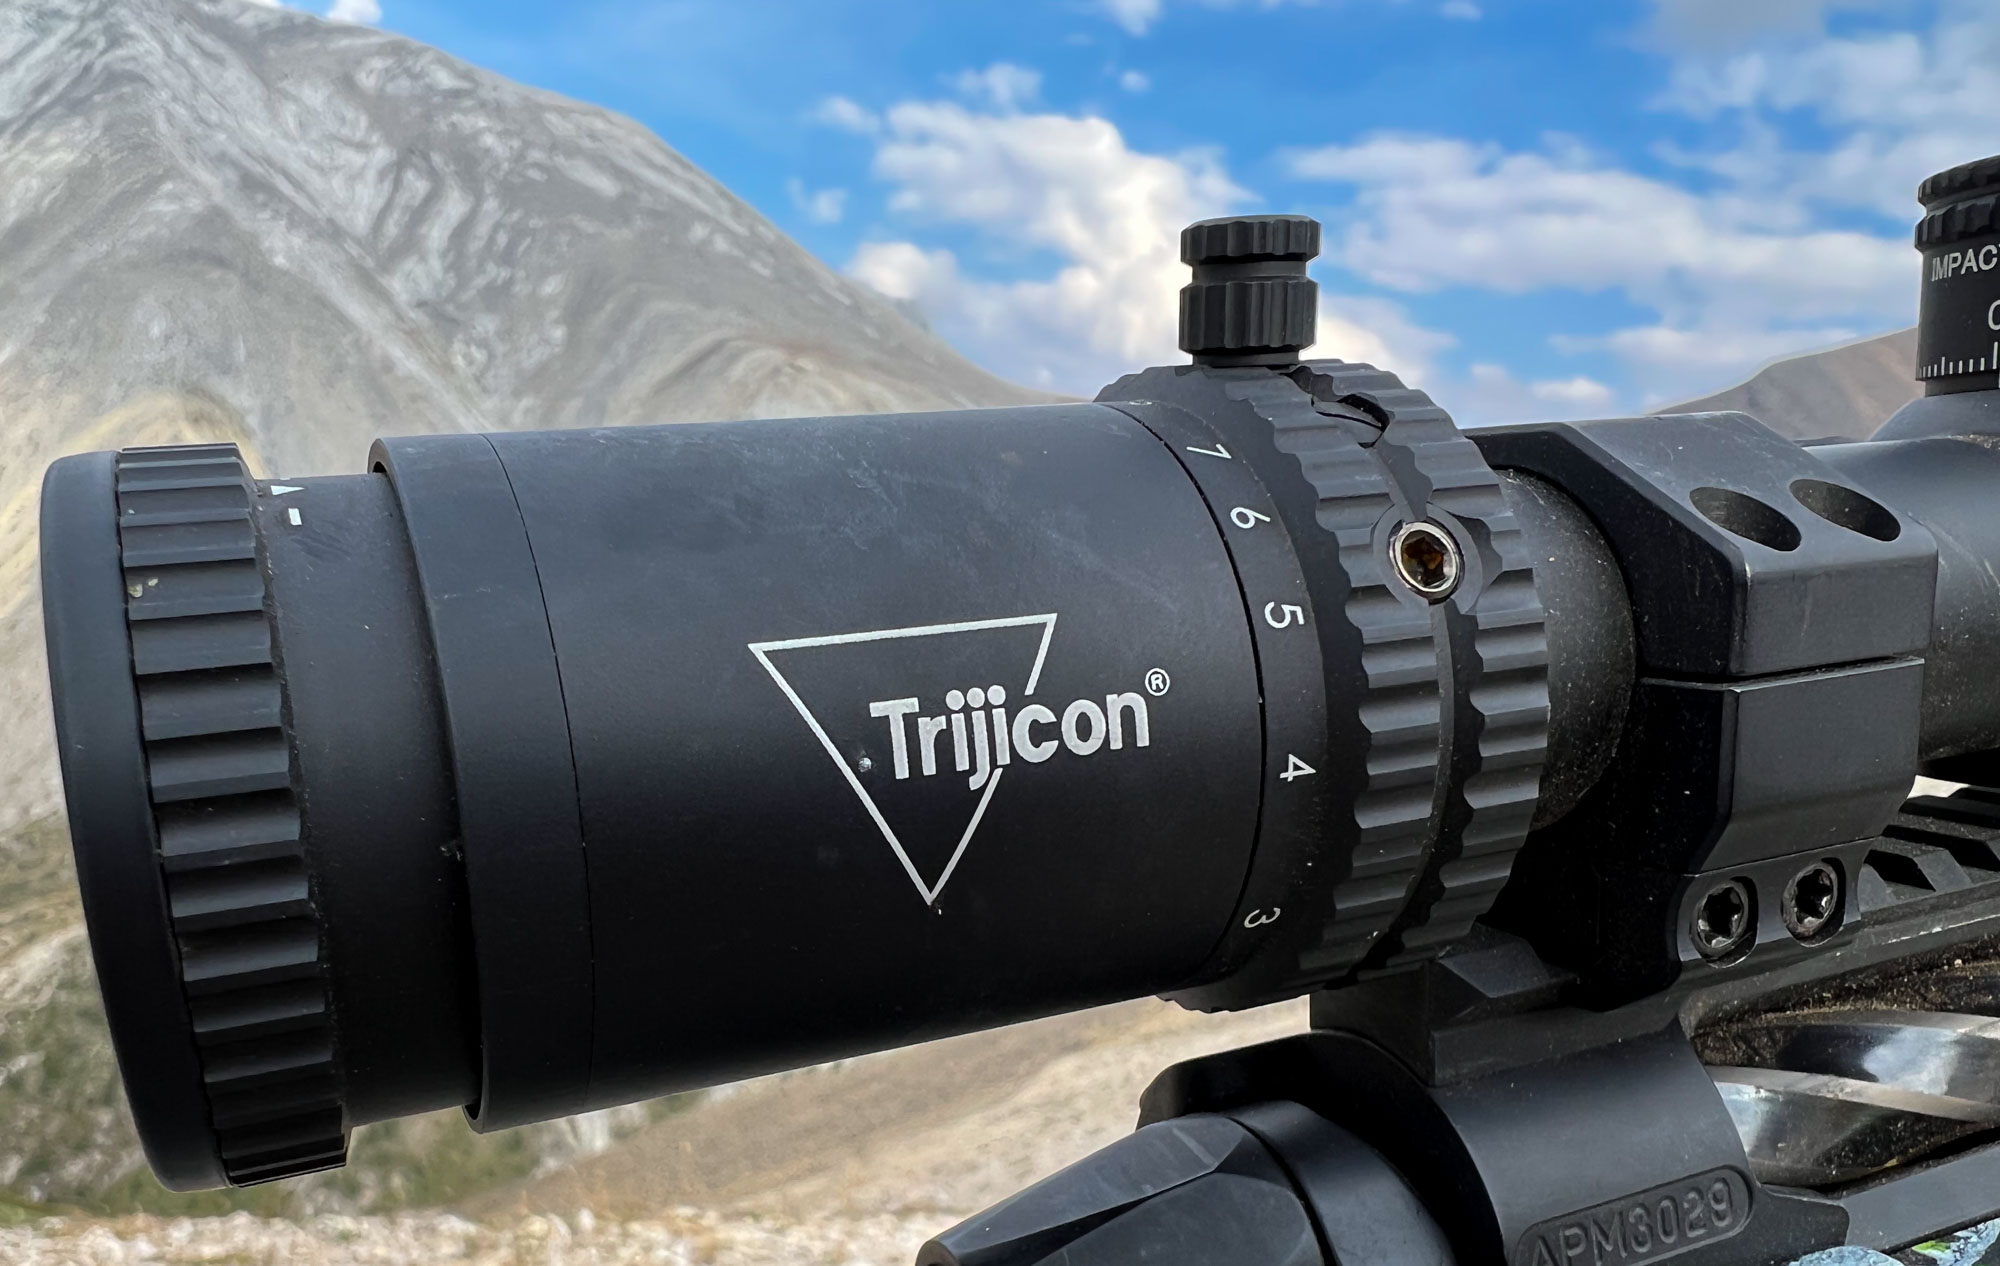 Detail of Trijicon scope